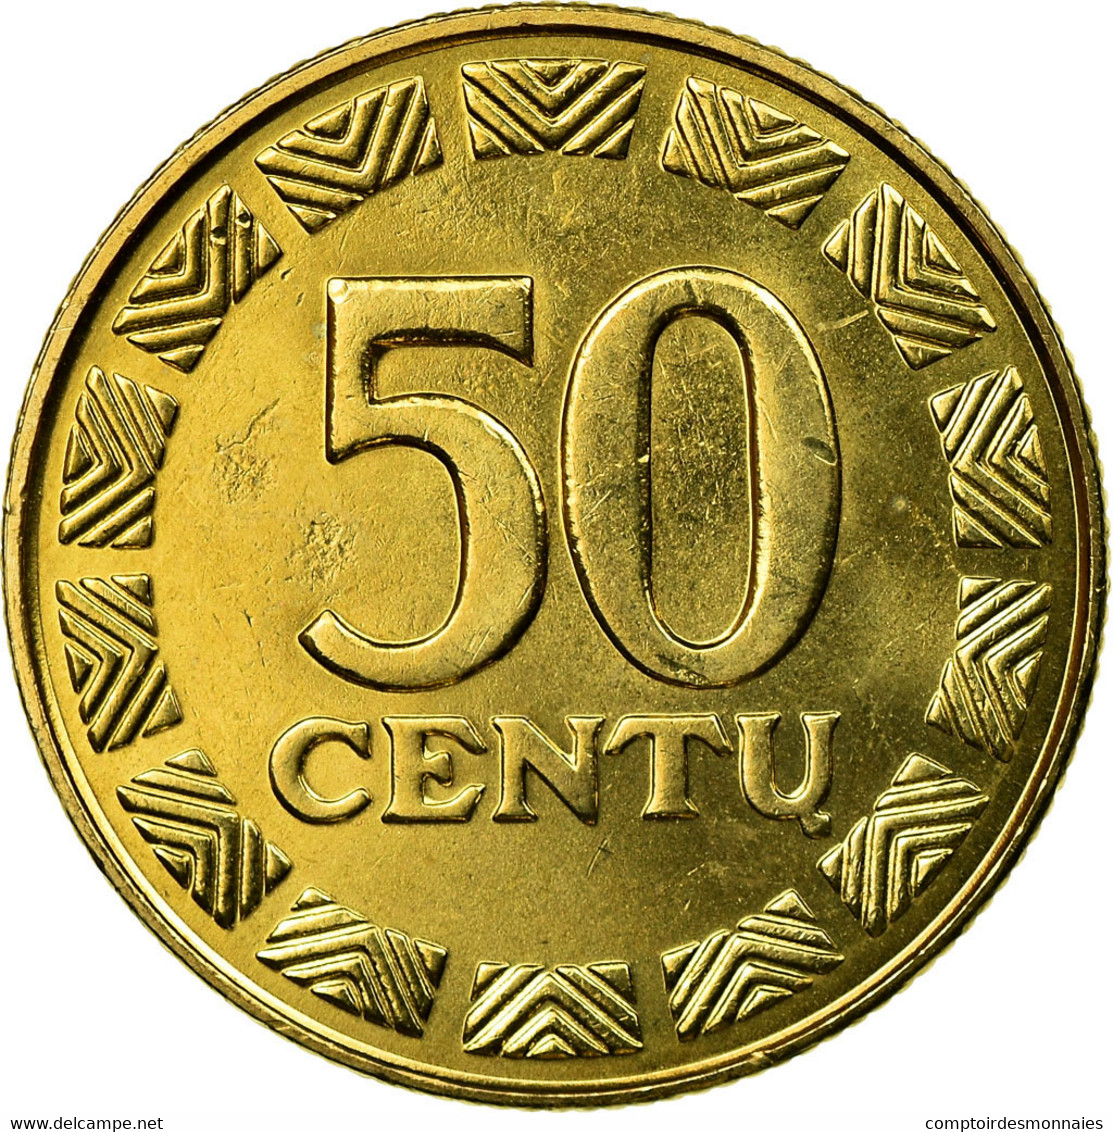 Monnaie, Lithuania, 50 Centu, 2000, SUP, Nickel-brass, KM:108 - Lituanie